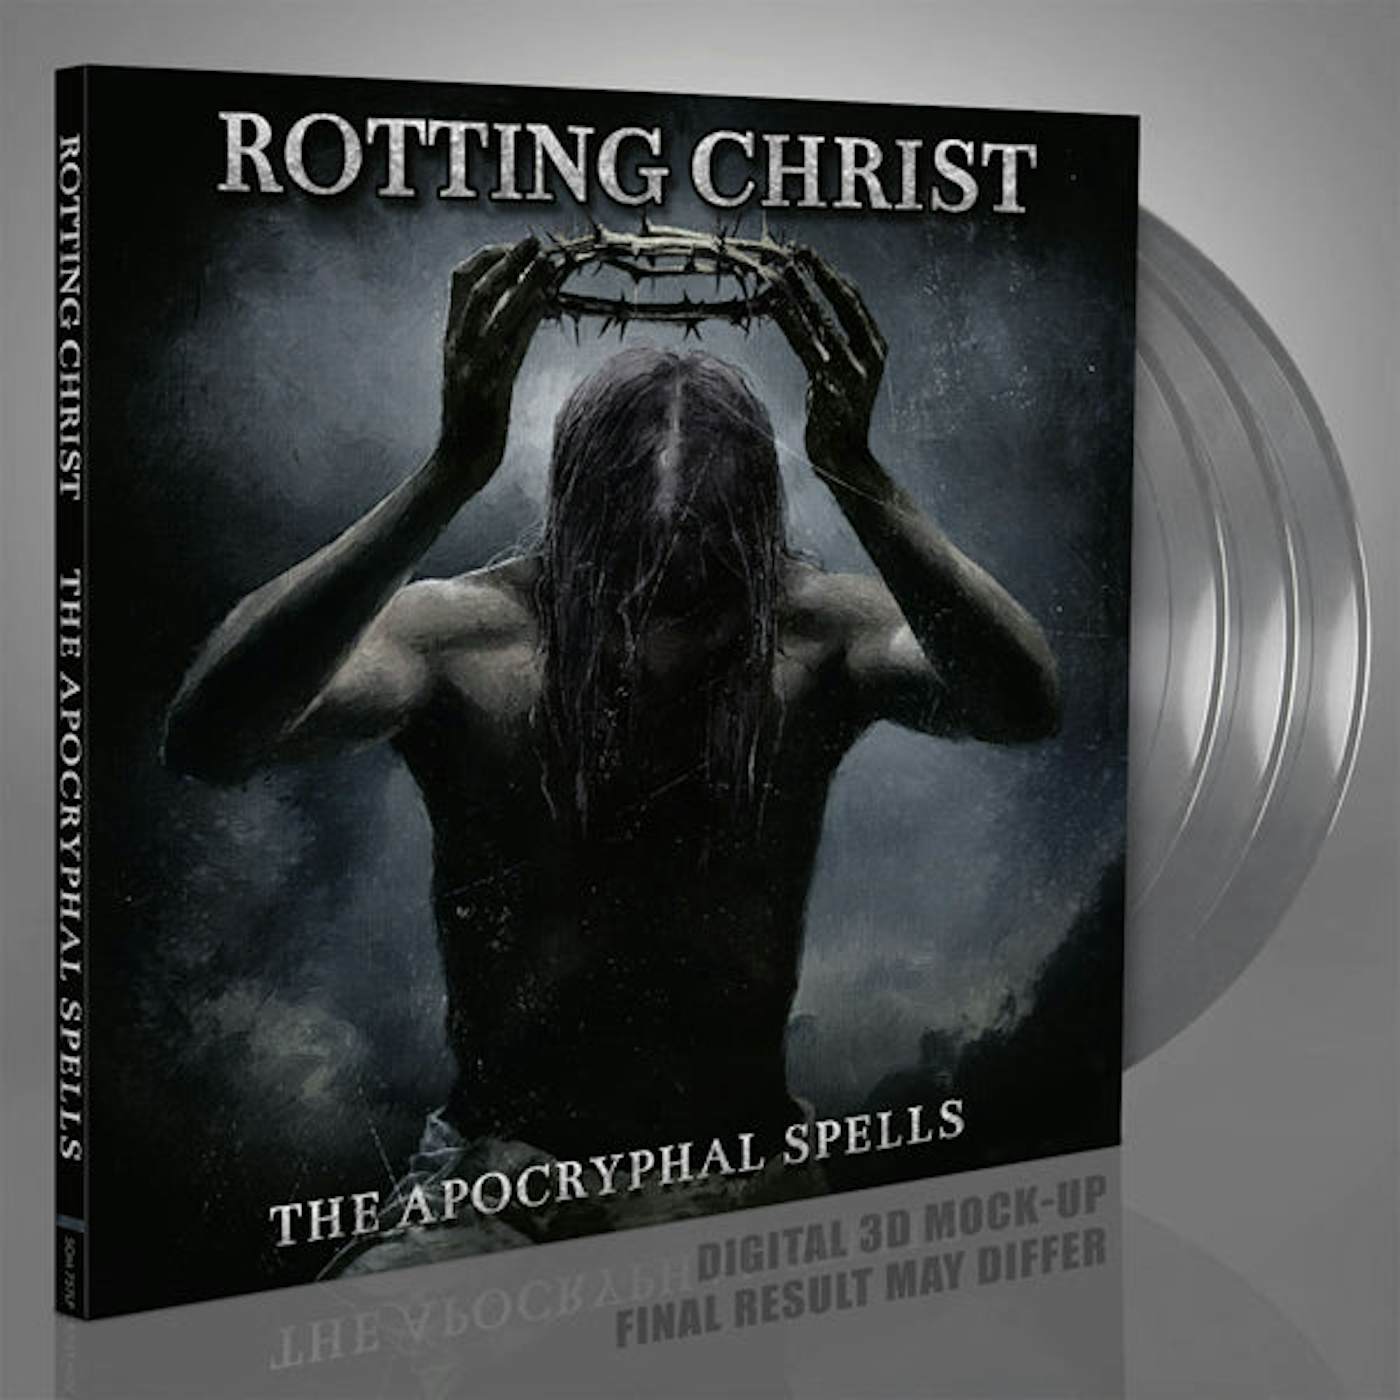 Rotting Christ LP - The Apocryphal Spells (Ltd Silver 3Lp) (Vinyl)